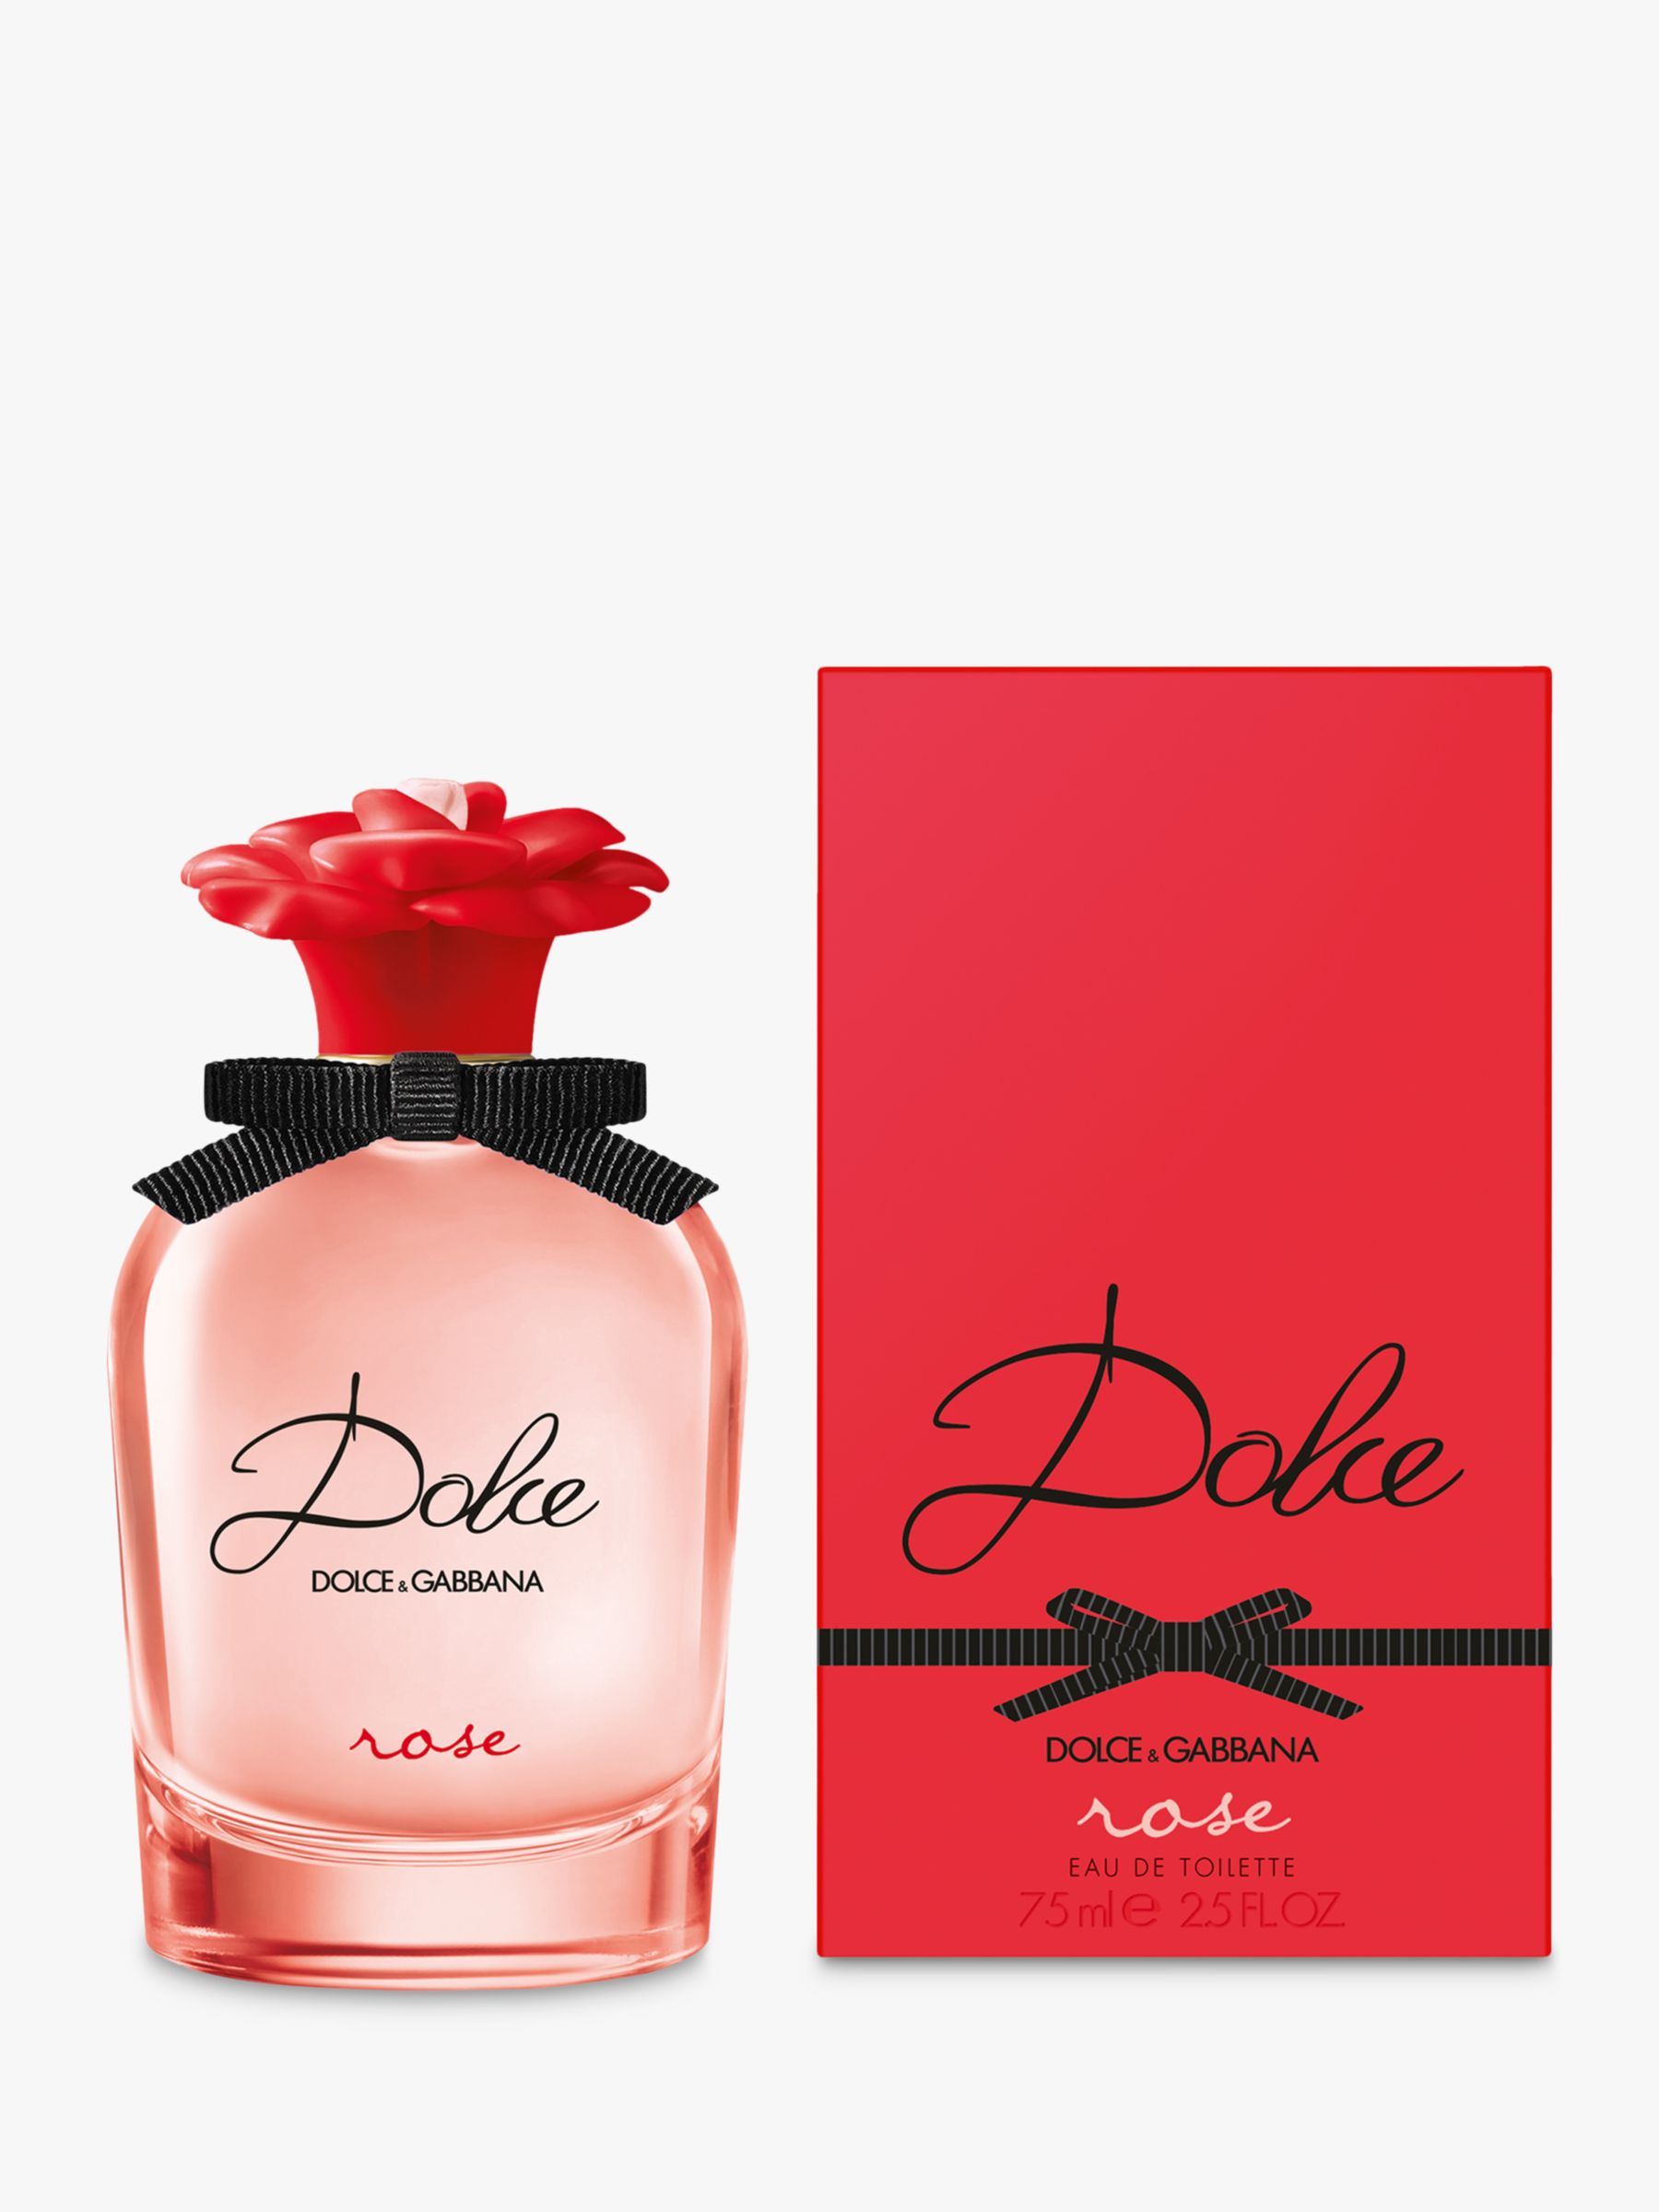 Dolce & Gabbana Dolce Rose Eau de Toilette, 75ml 2